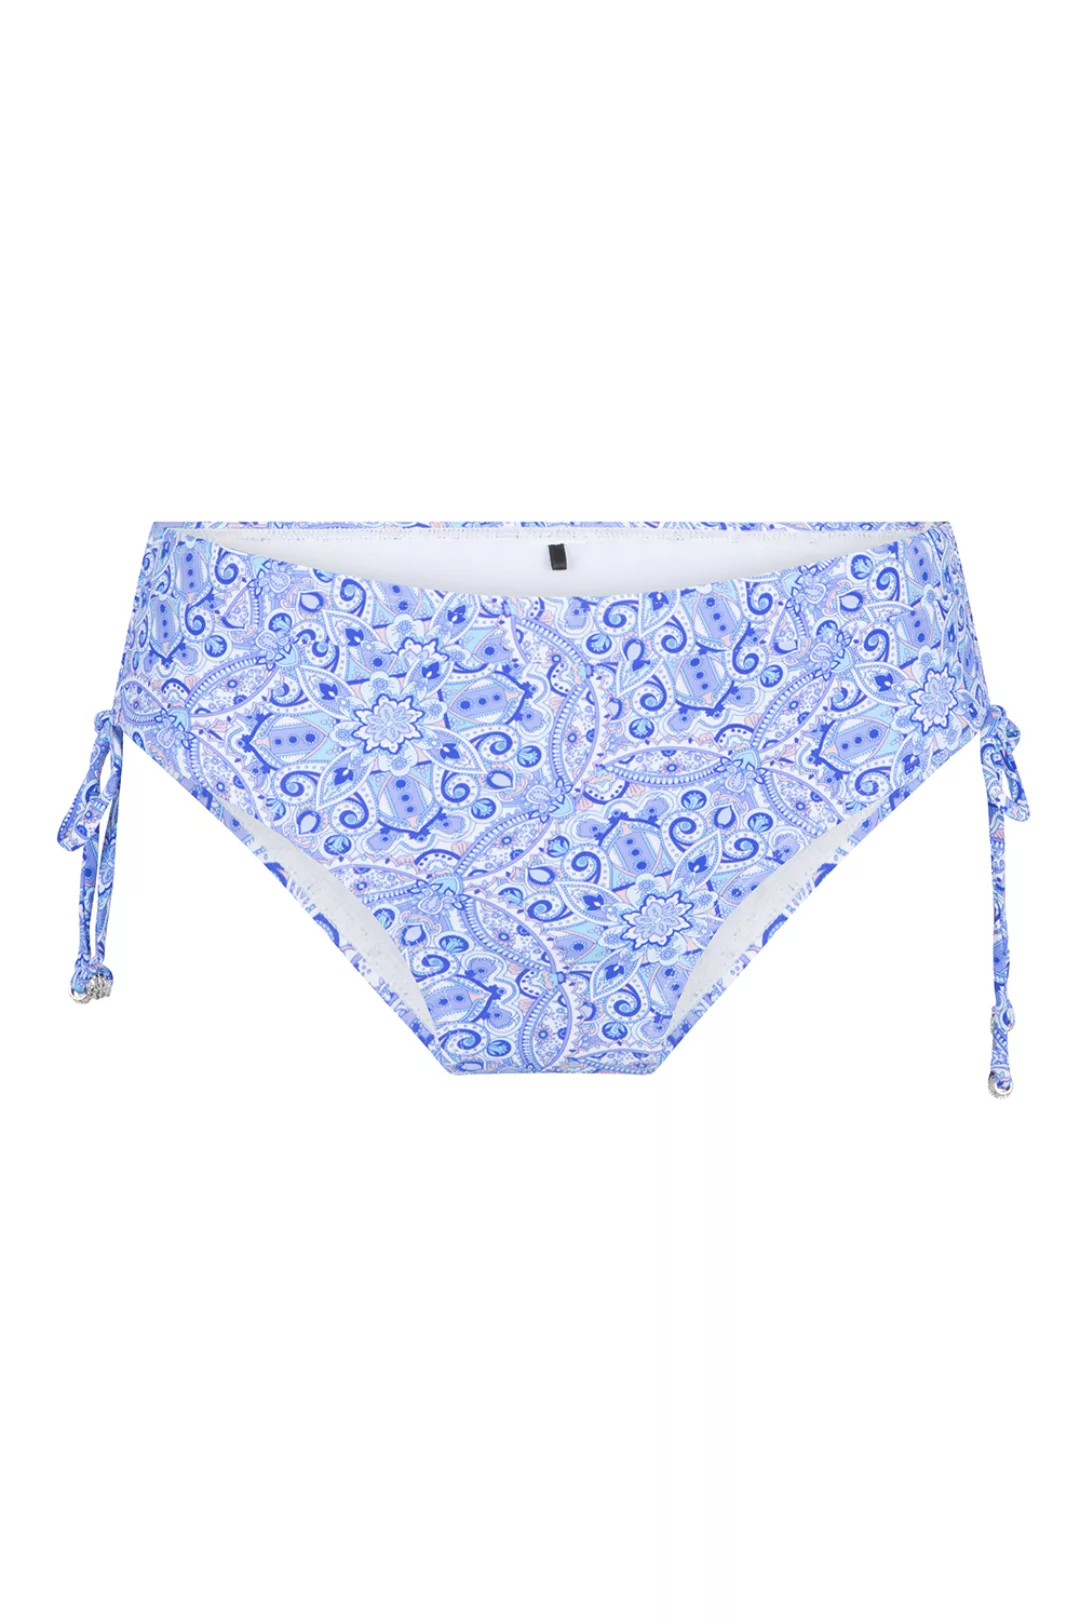 LingaDore Bikini Shorty Blue Paisley 40 blau günstig online kaufen